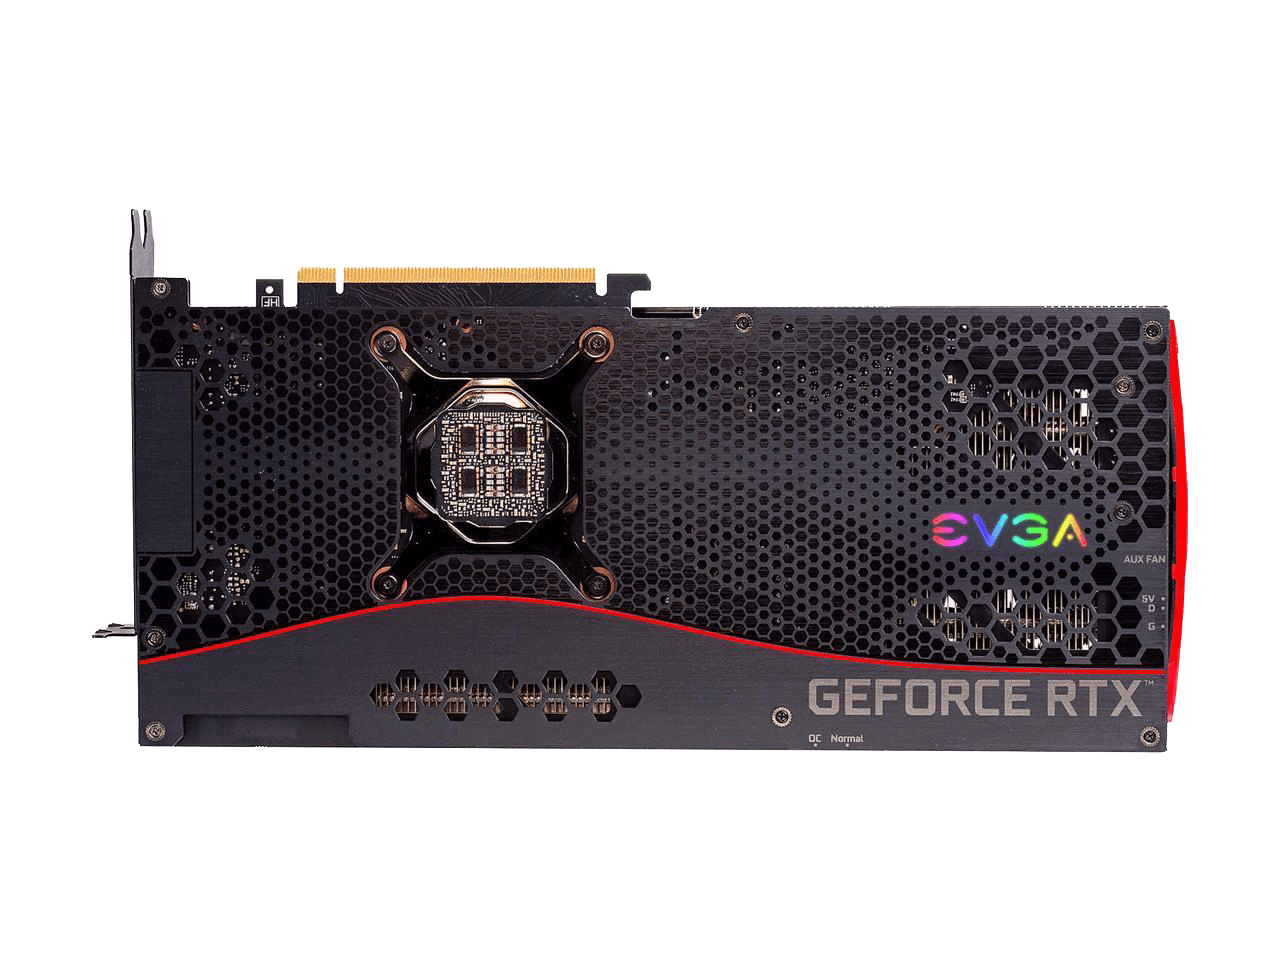 EVGA GeForce RTX 3080 FTW3 ULTRA GAMING 10GB GDDR6X iCX3 Technology ARGB LED Metal Backplate Video Graphics Card 10G-P5-3897-KR